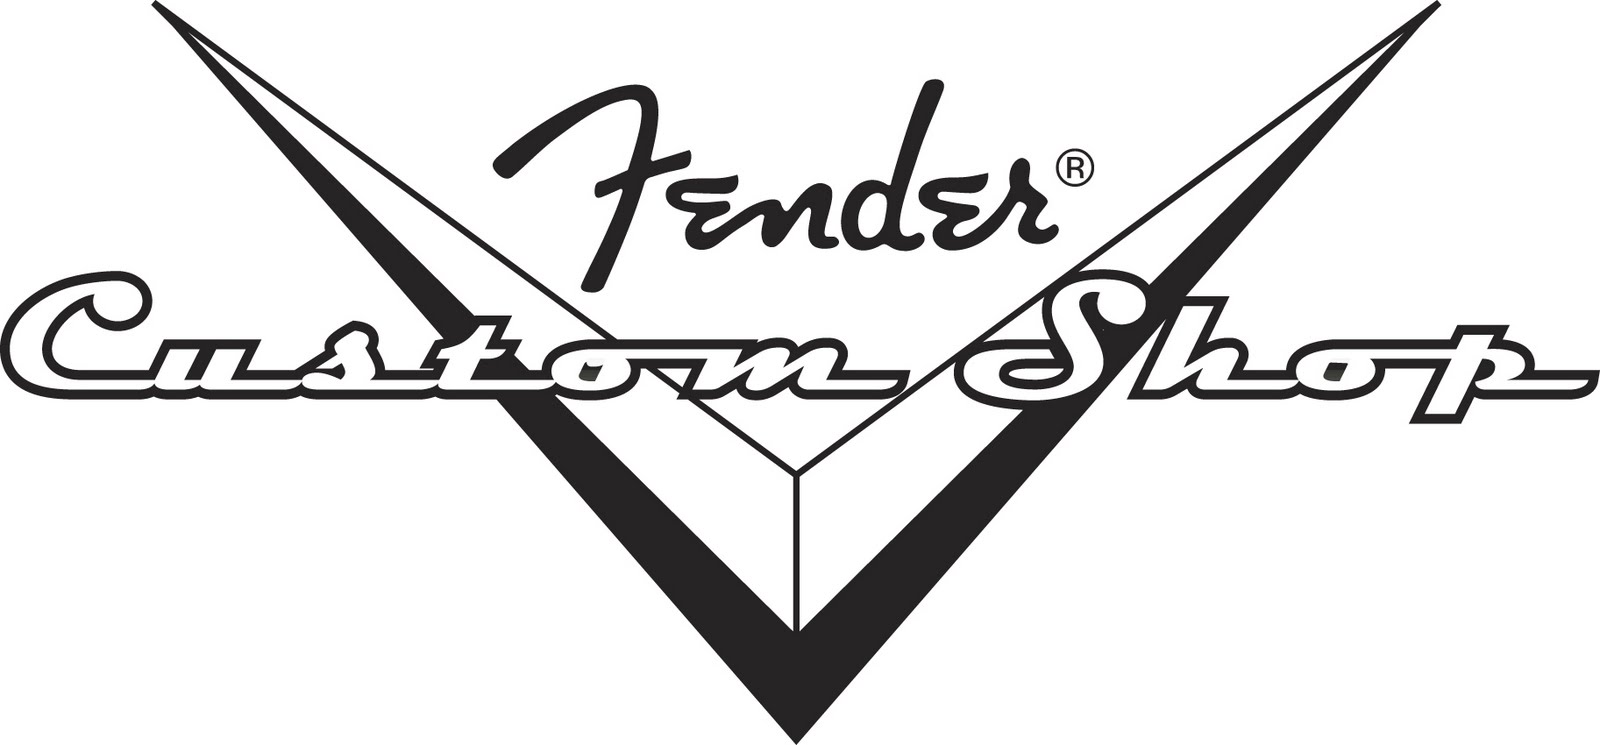 Free download Fender Logo Fender custom shop 69 reissue [1600x745] for your Desktop, Mobile & Tablet. Explore Fender Custom Shop Wallpaper. Fender Custom Shop Wallpaper, Fender Wallpaper, Wallpaper. Shop